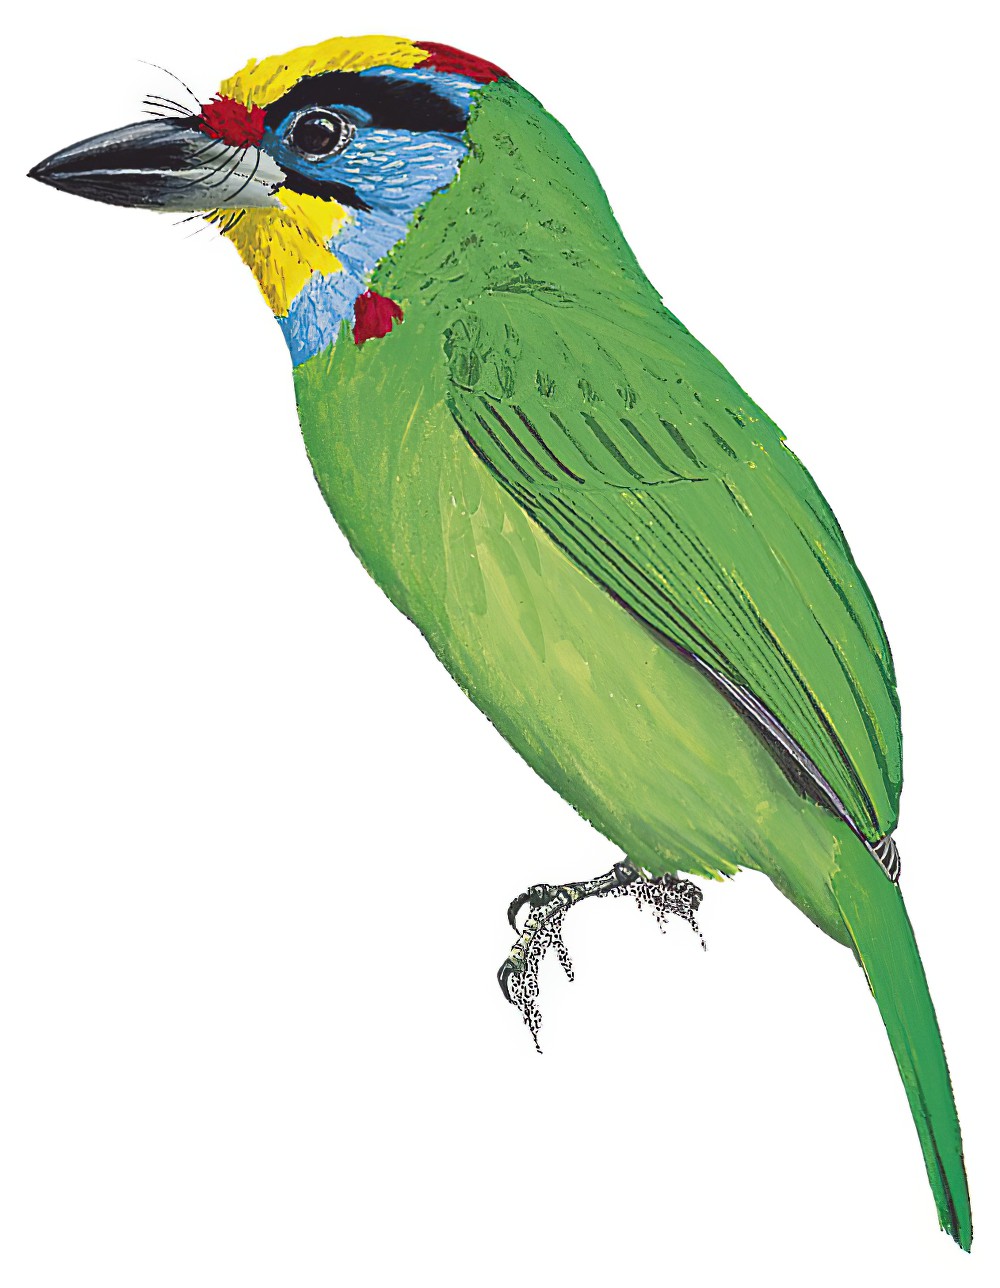 马来拟啄木鸟 / Black-browed Barbet / Psilopogon oorti